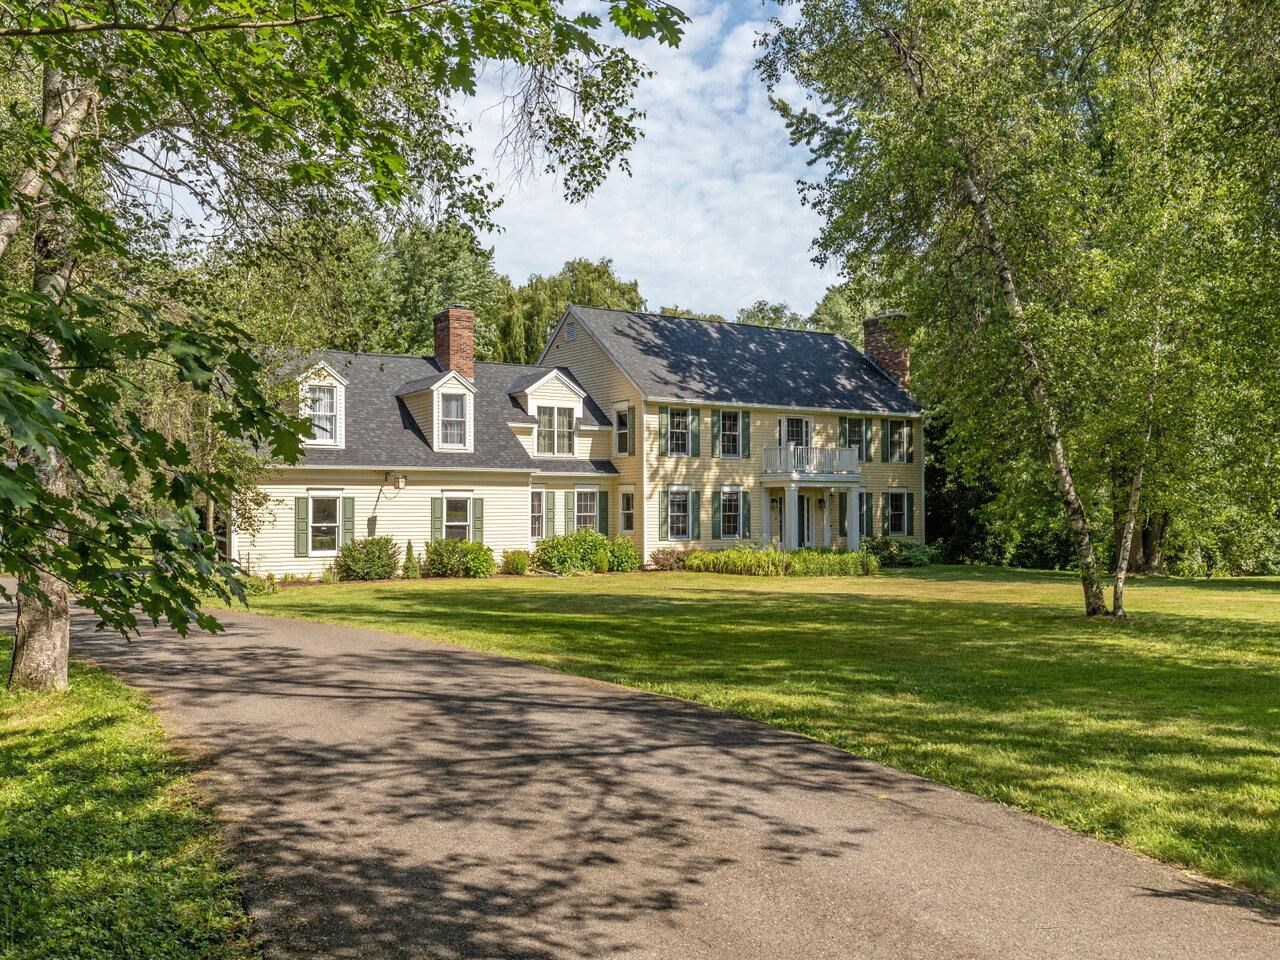 Sold property in Shelburne